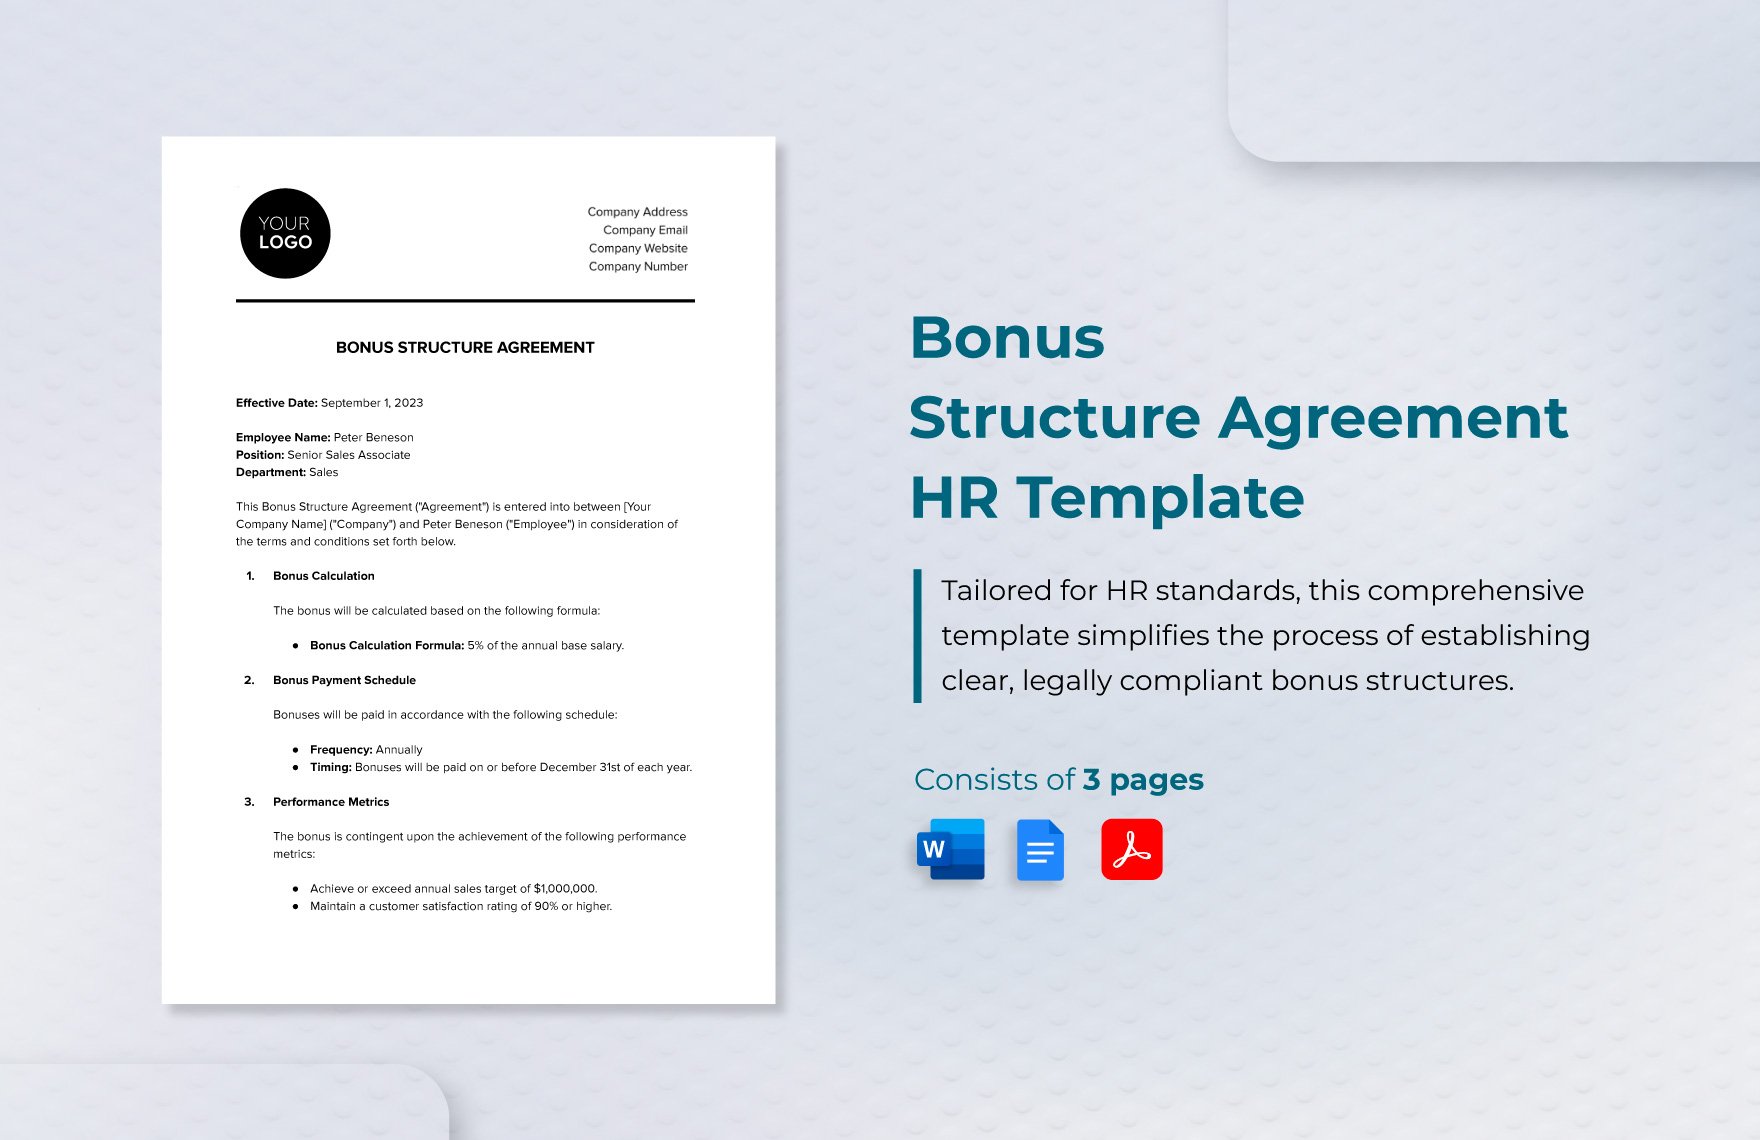 Bonus Structure Agreement HR Template